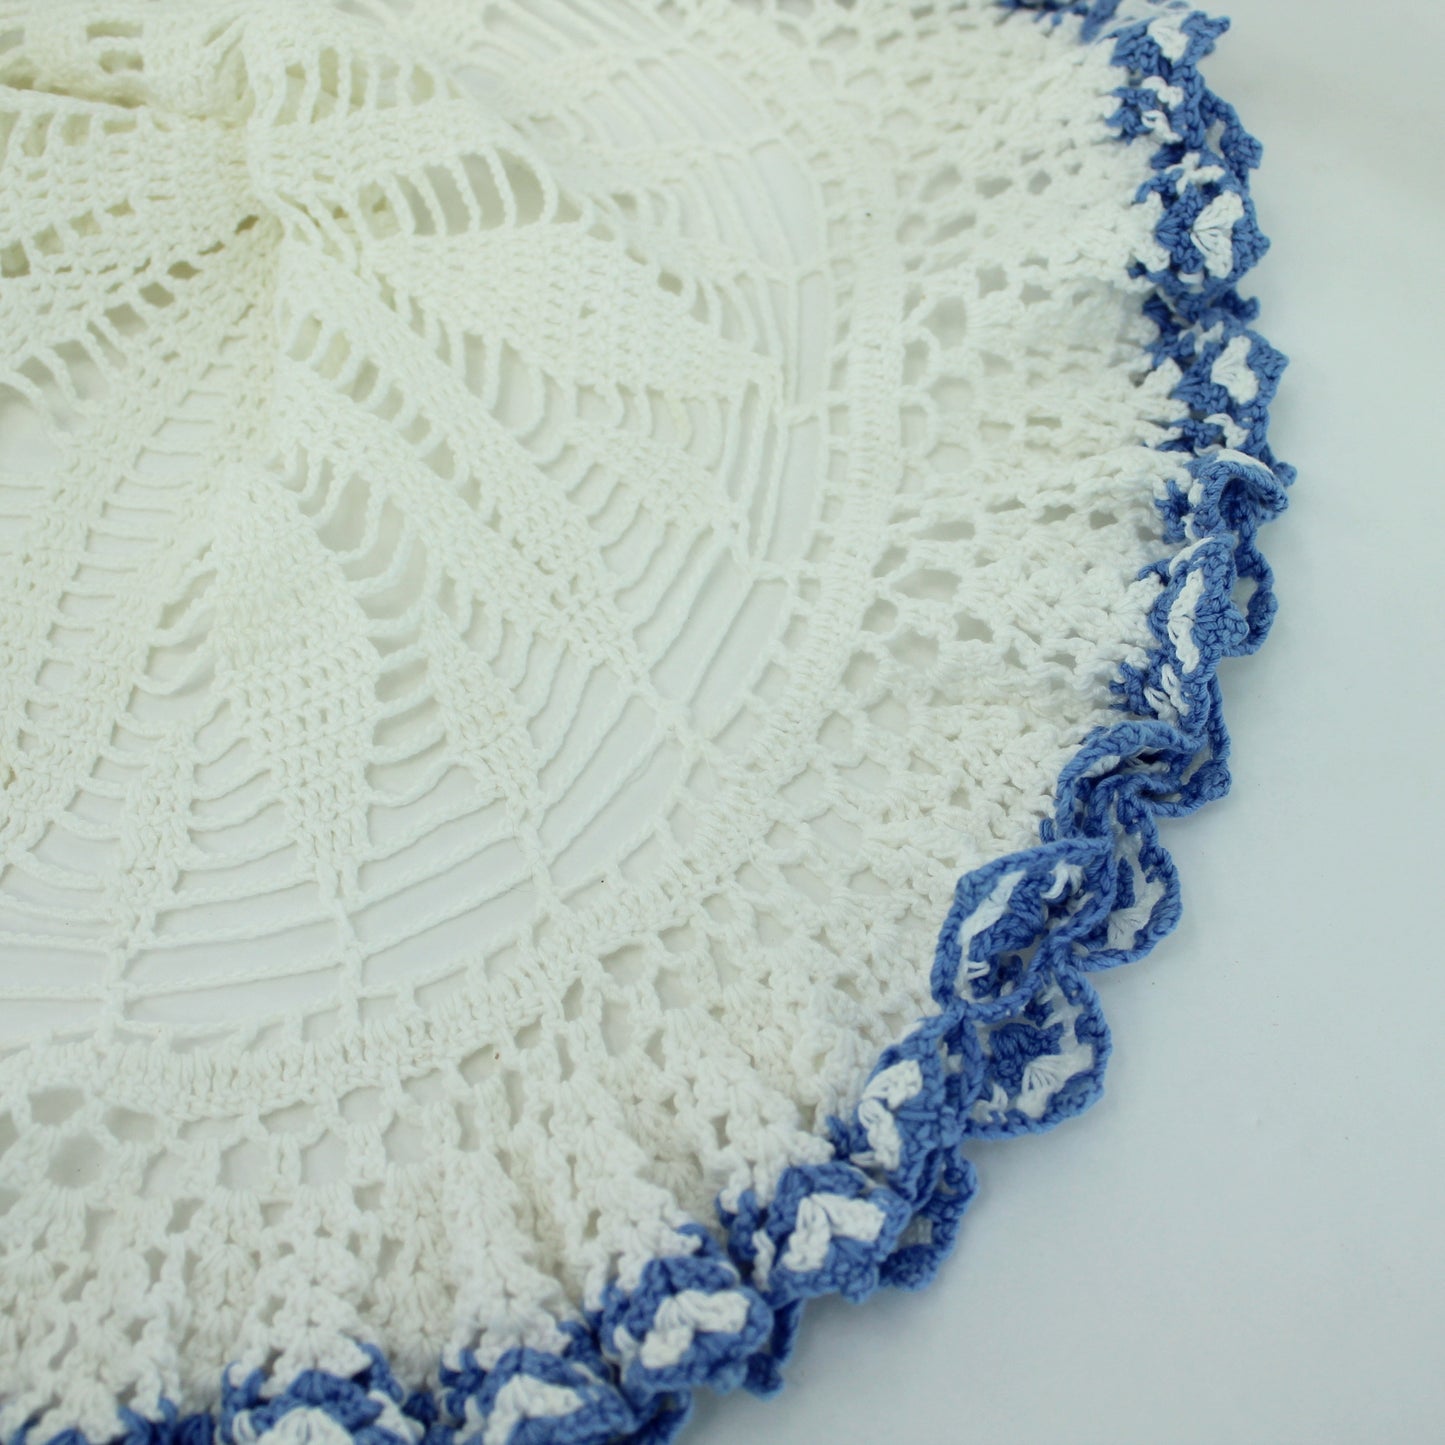 Large Round Crochet Doily Tablecloth White Heavy Blue Ruffle 21" Diameter closeup edge